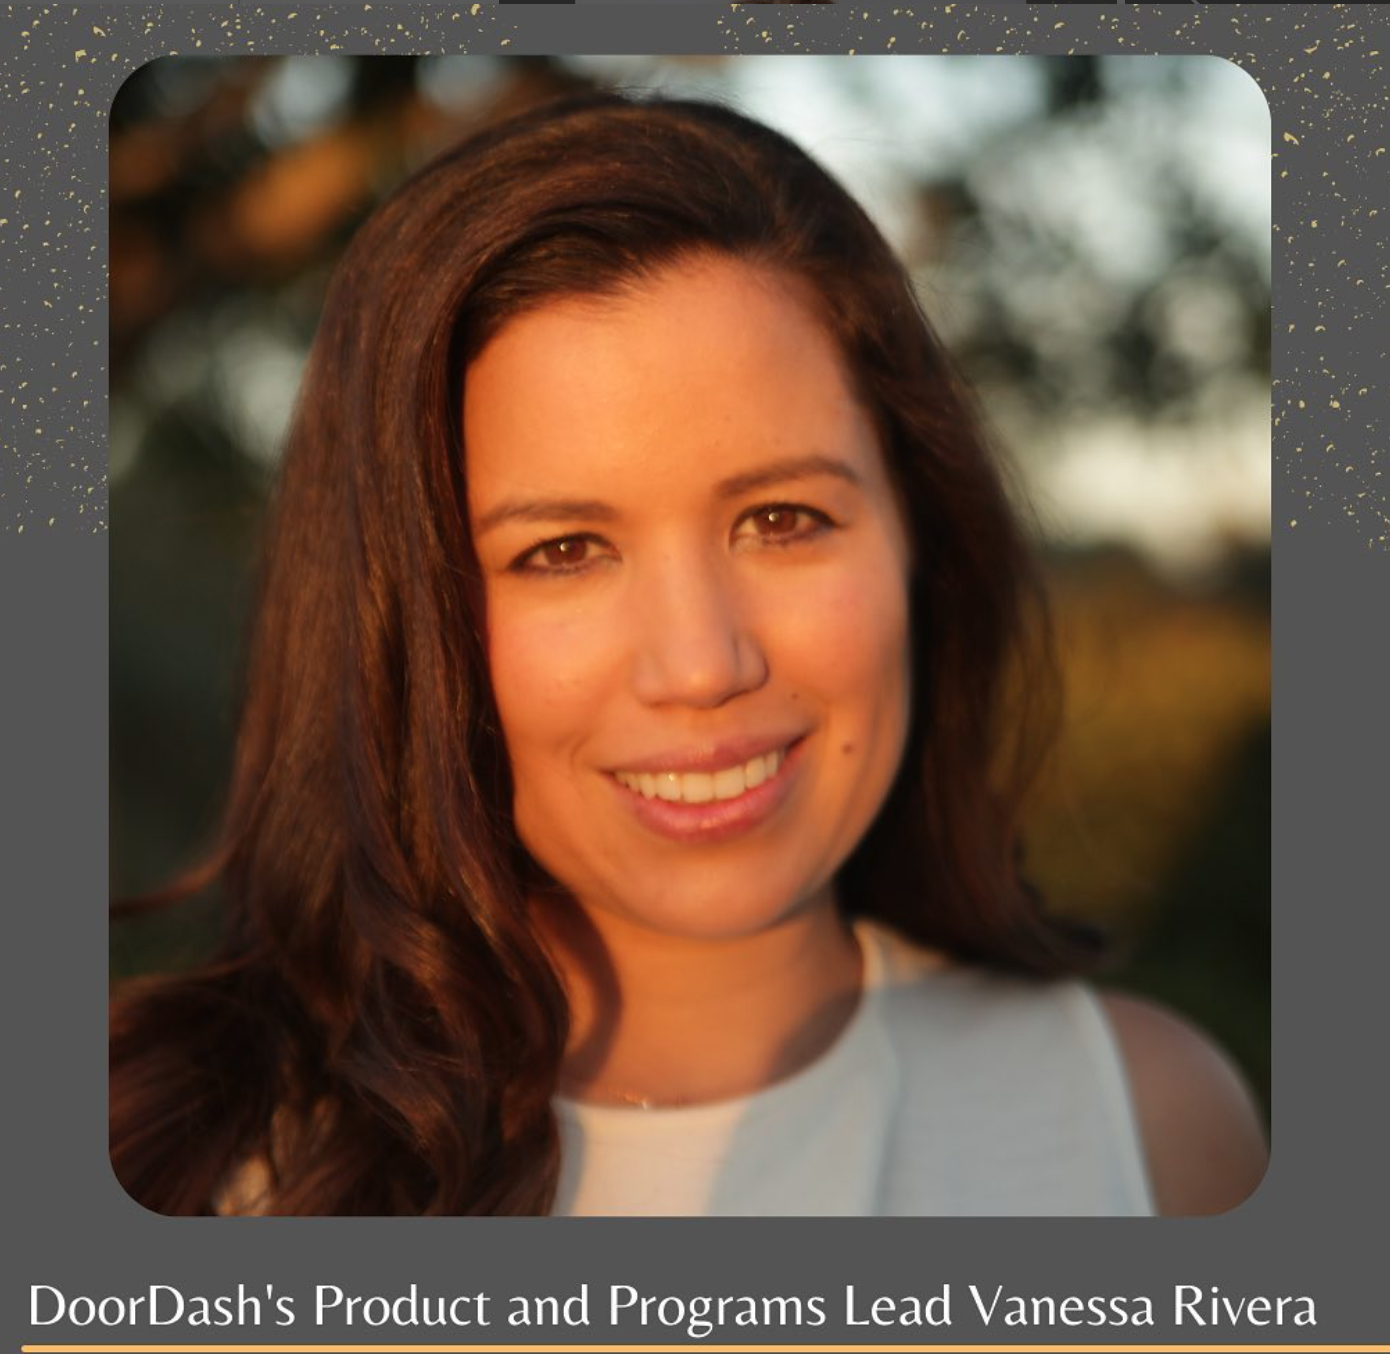 DoorDash’s Product and Programs Lead Vanessa Rivera